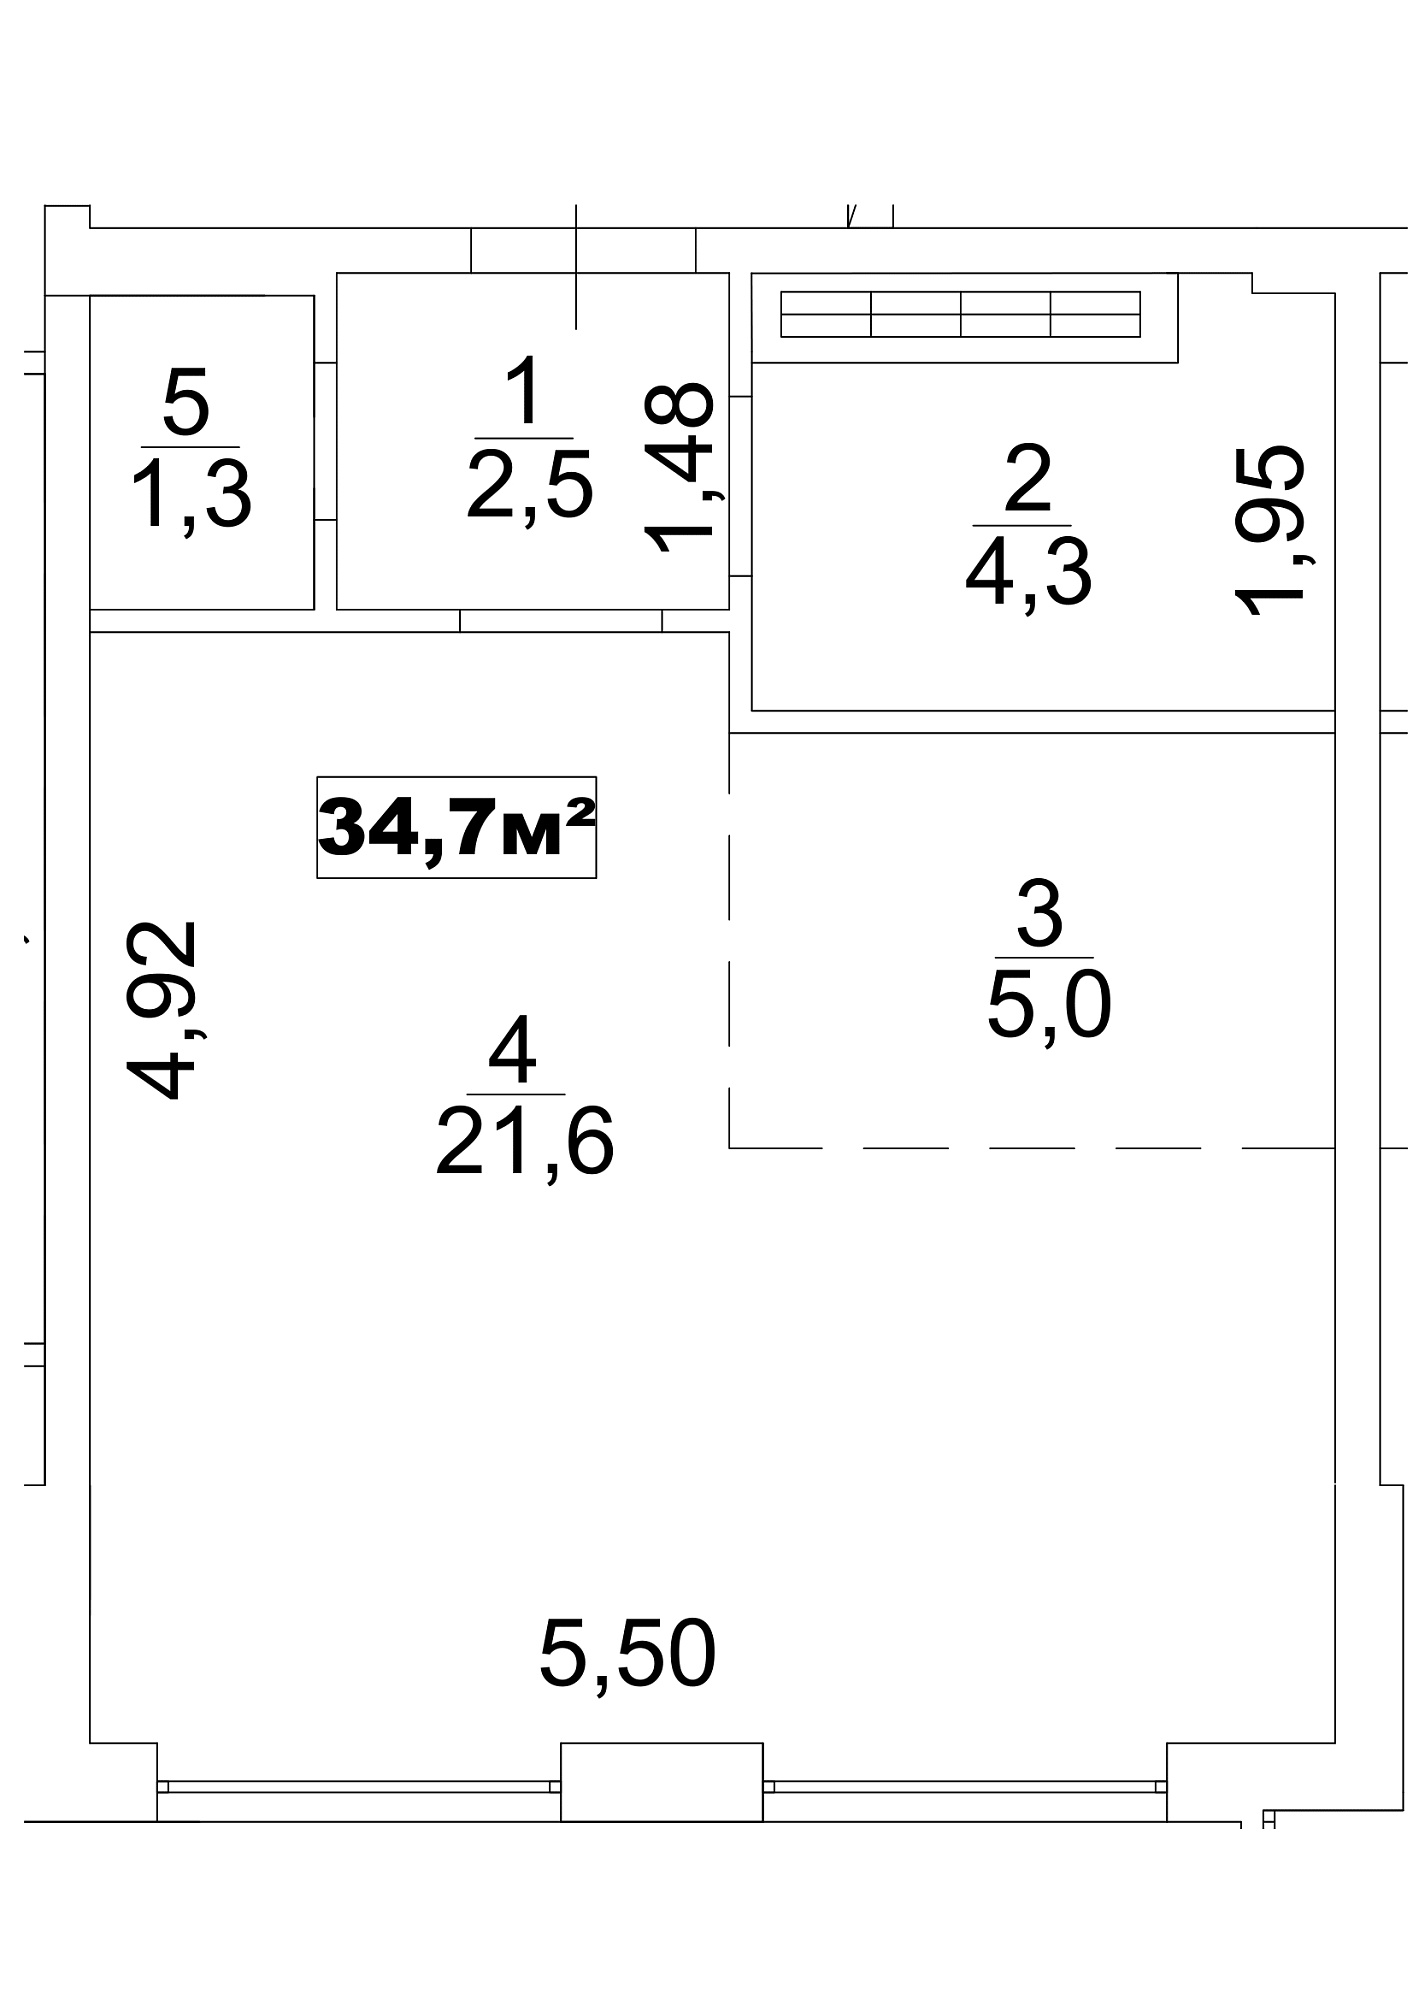 Planning Smart flats area 34.7m2, AB-13-09/00071.